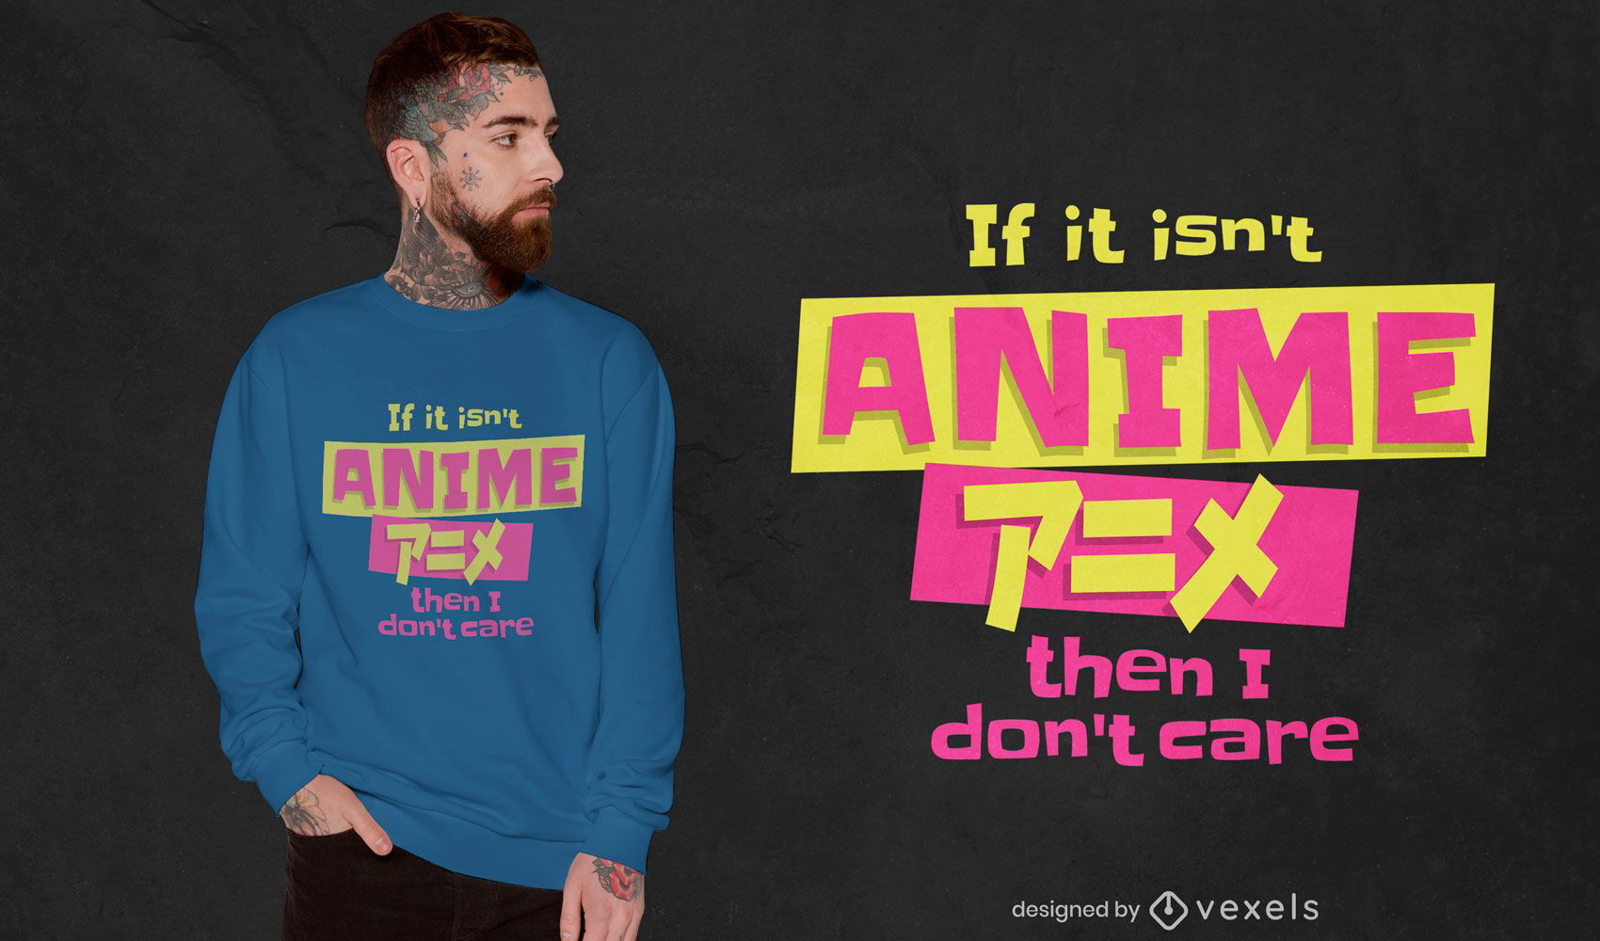 Anime fan quote t-shirt design